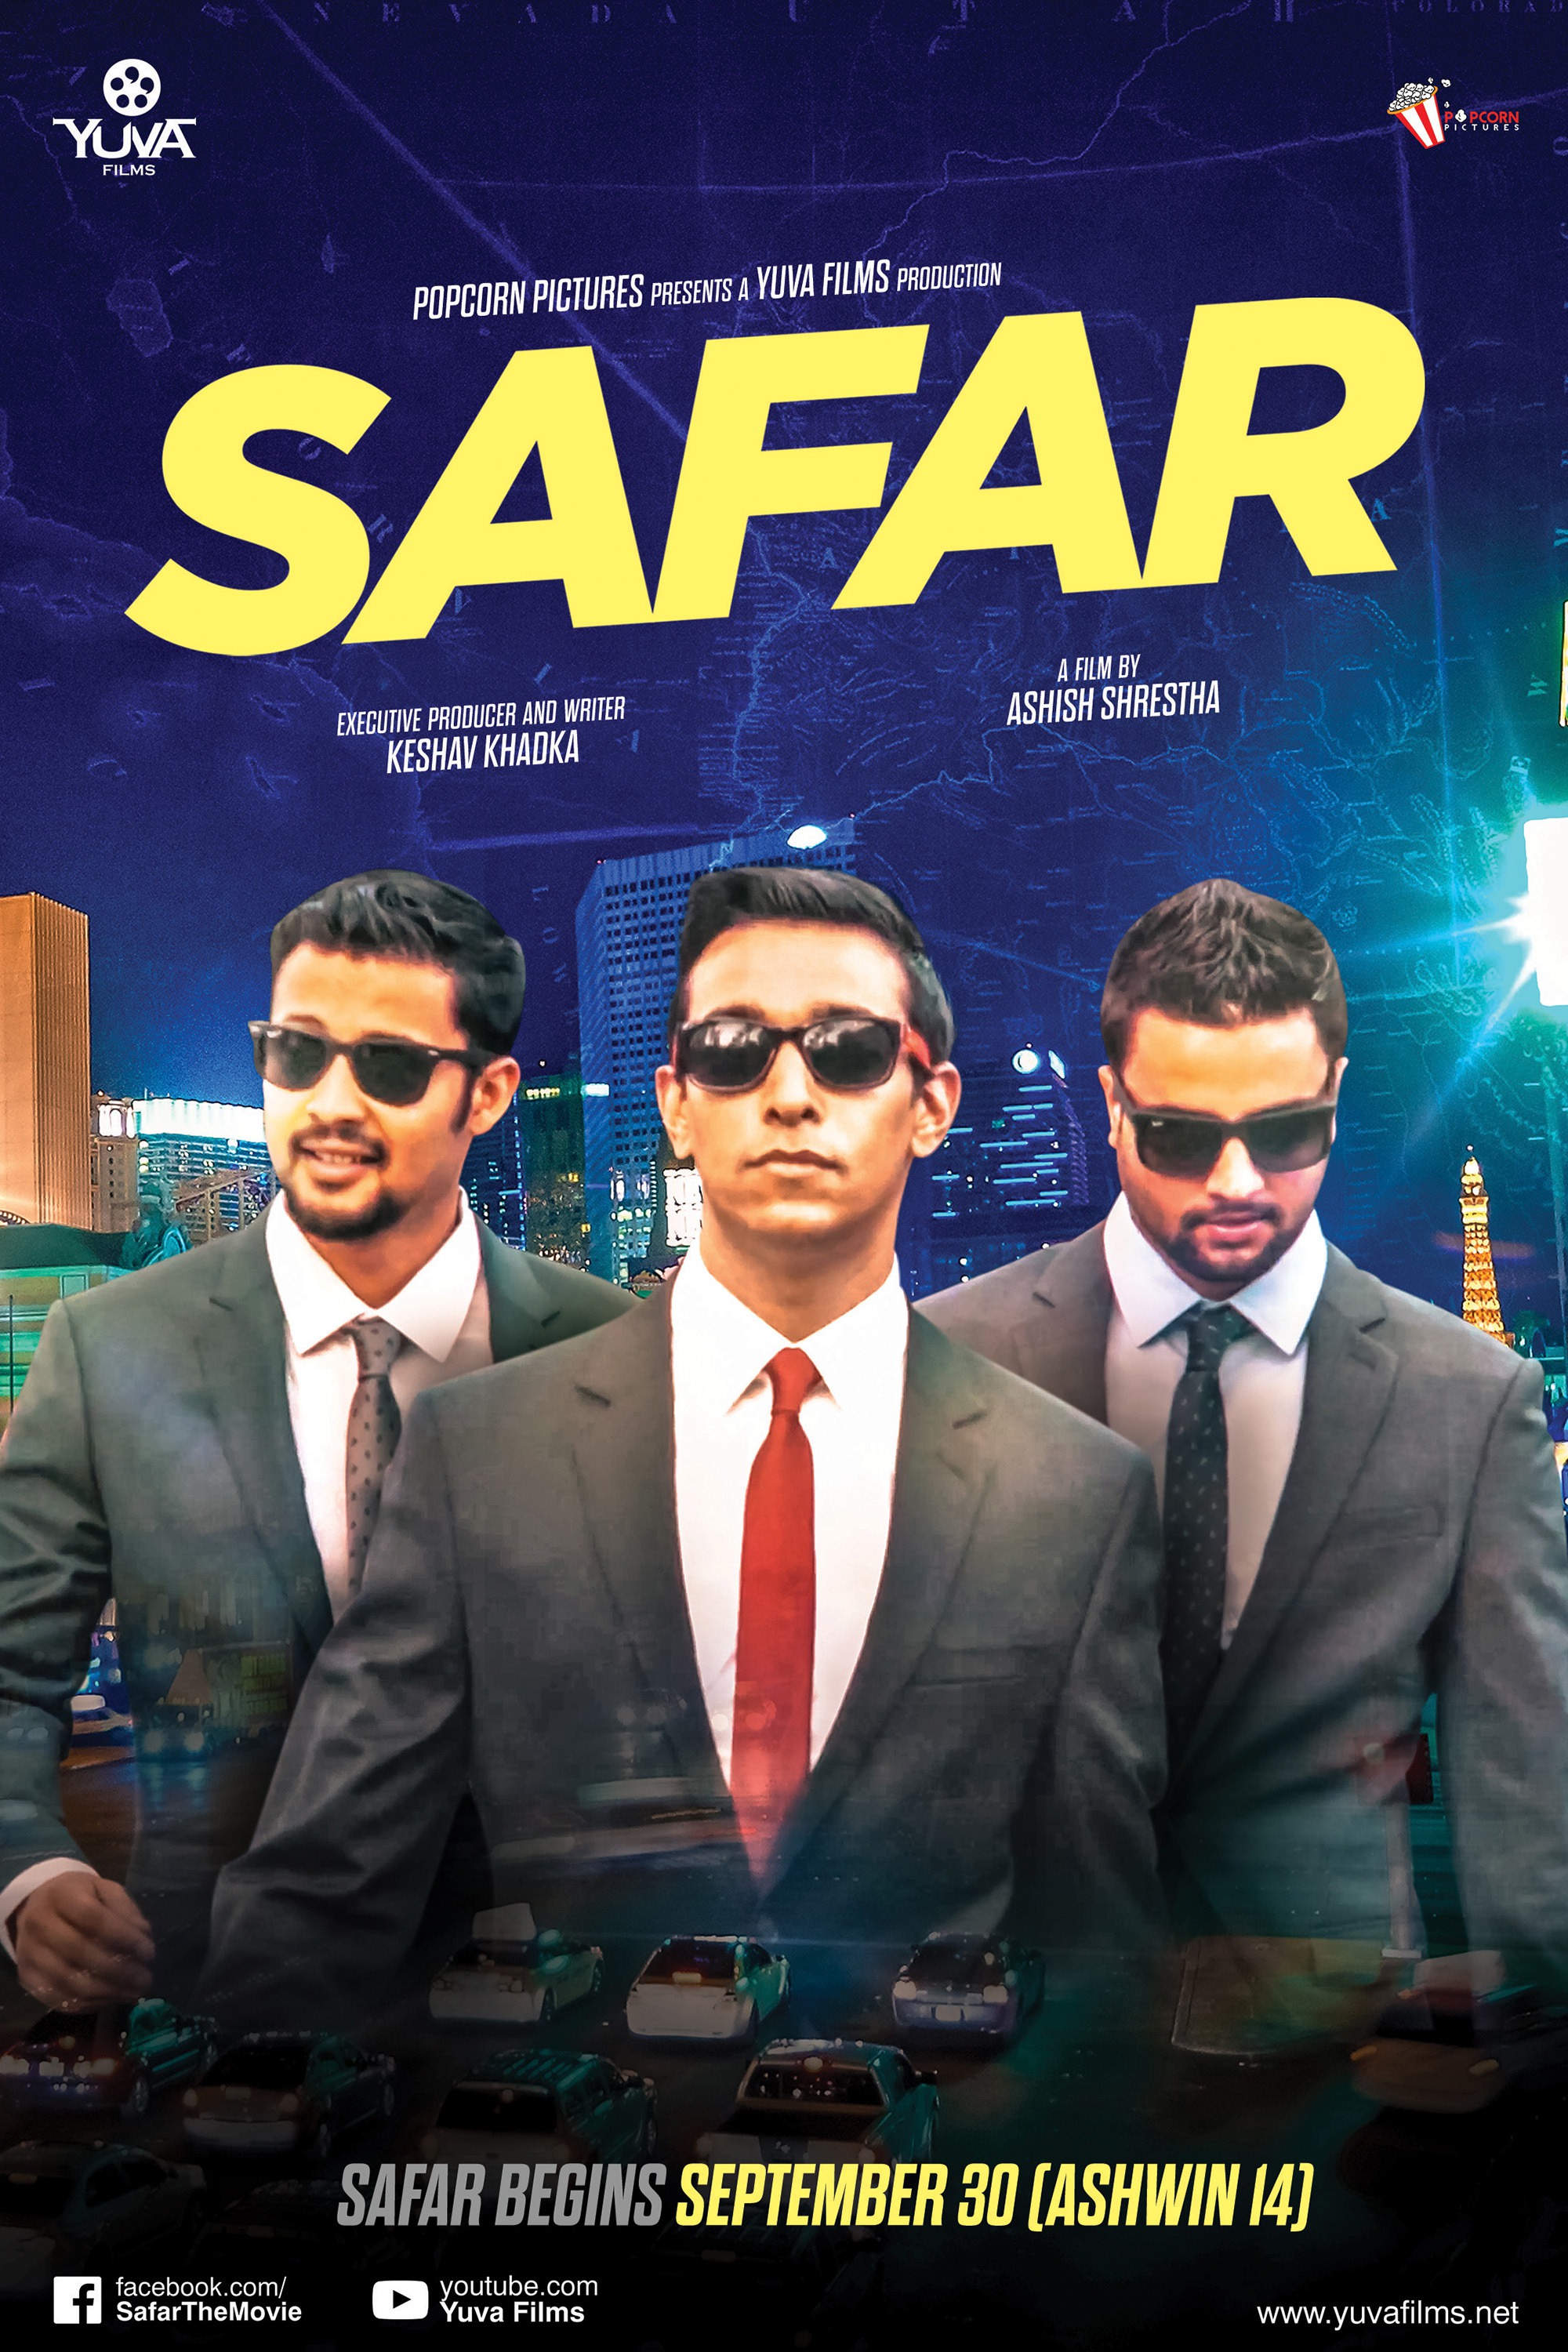 Mega Sized Movie Poster Image for Safar (#5 of 5)